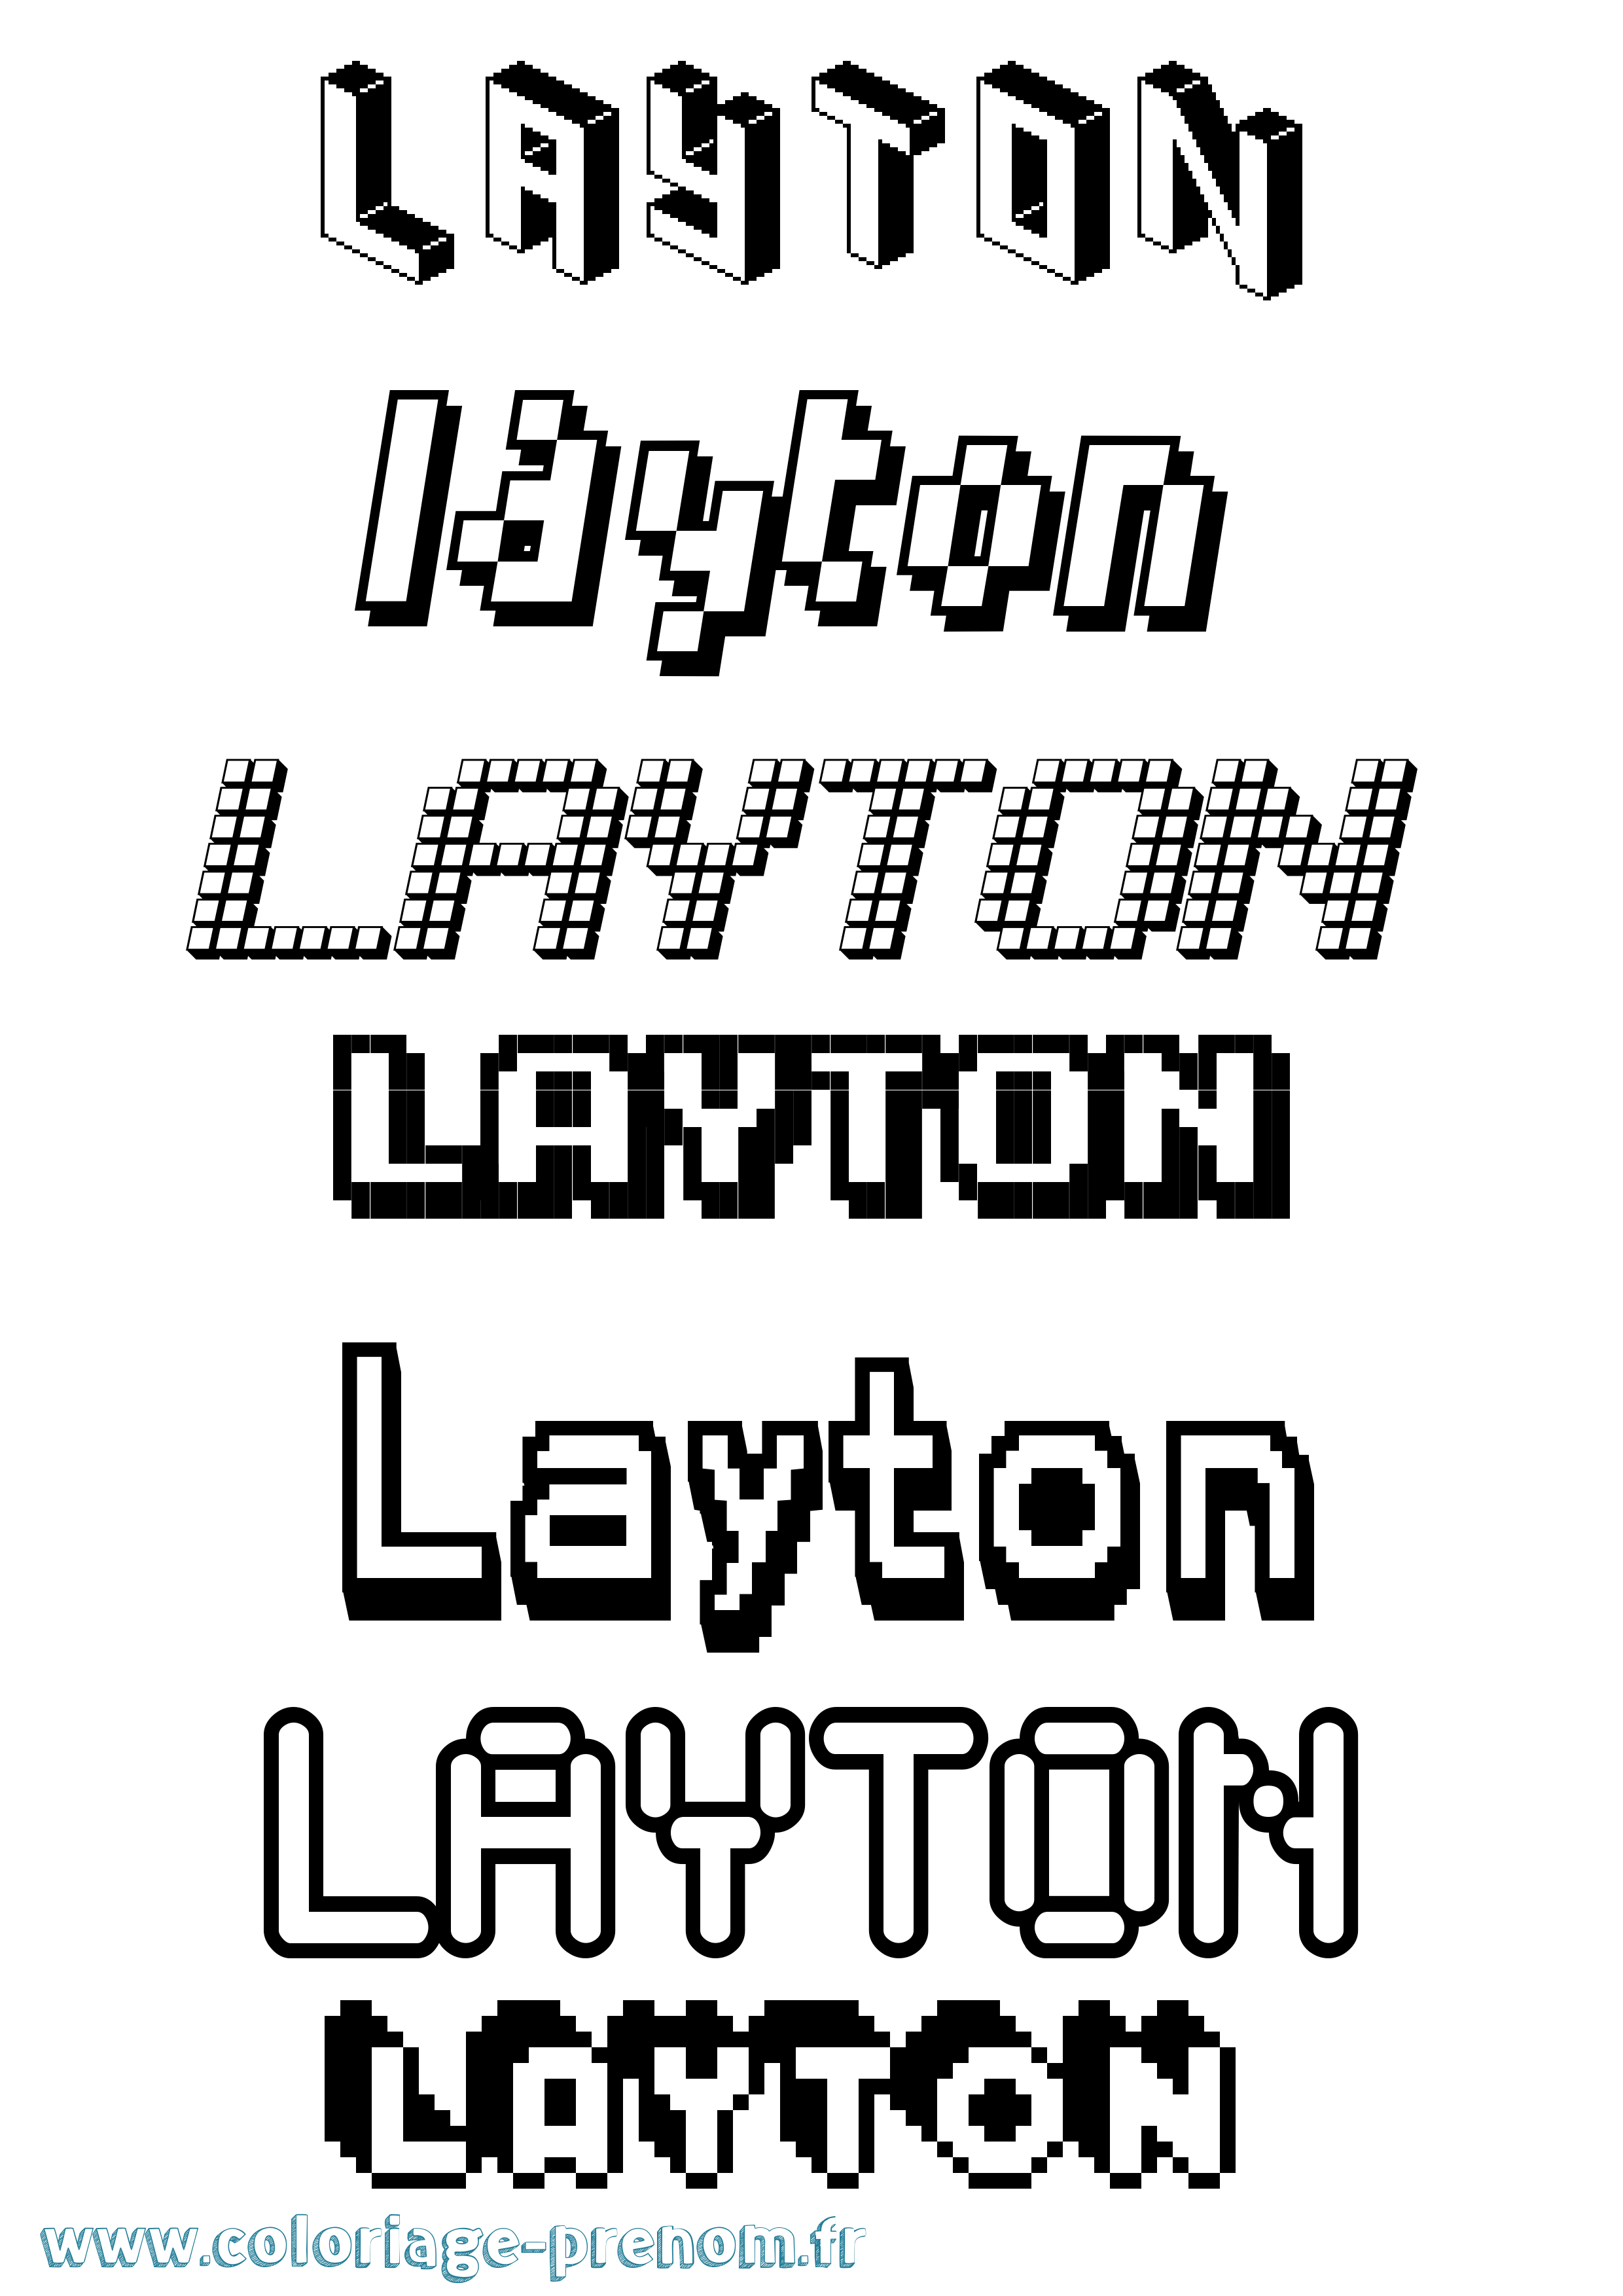 Coloriage prénom Layton Pixel